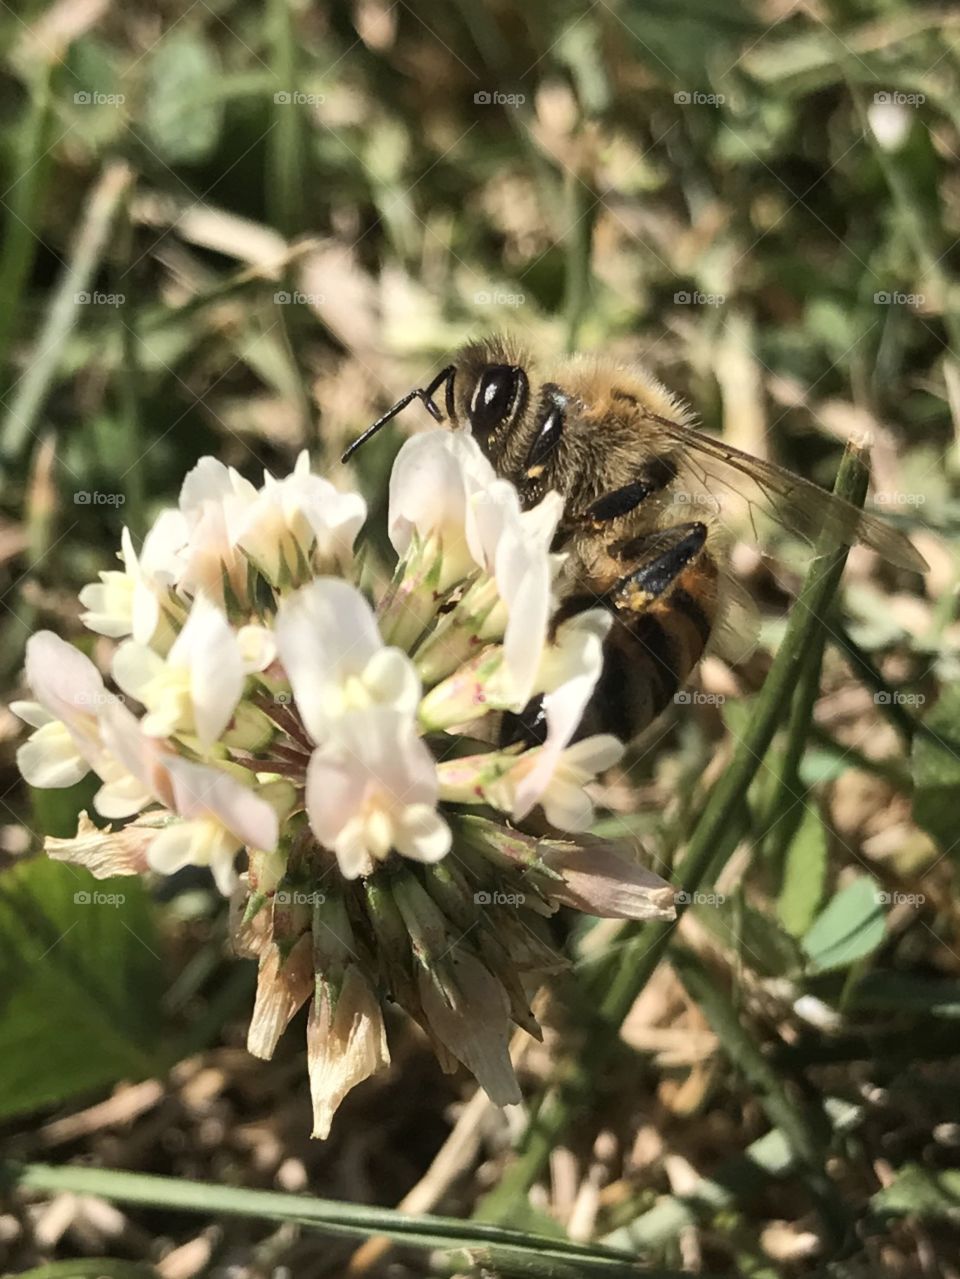 Bee spreading pollen